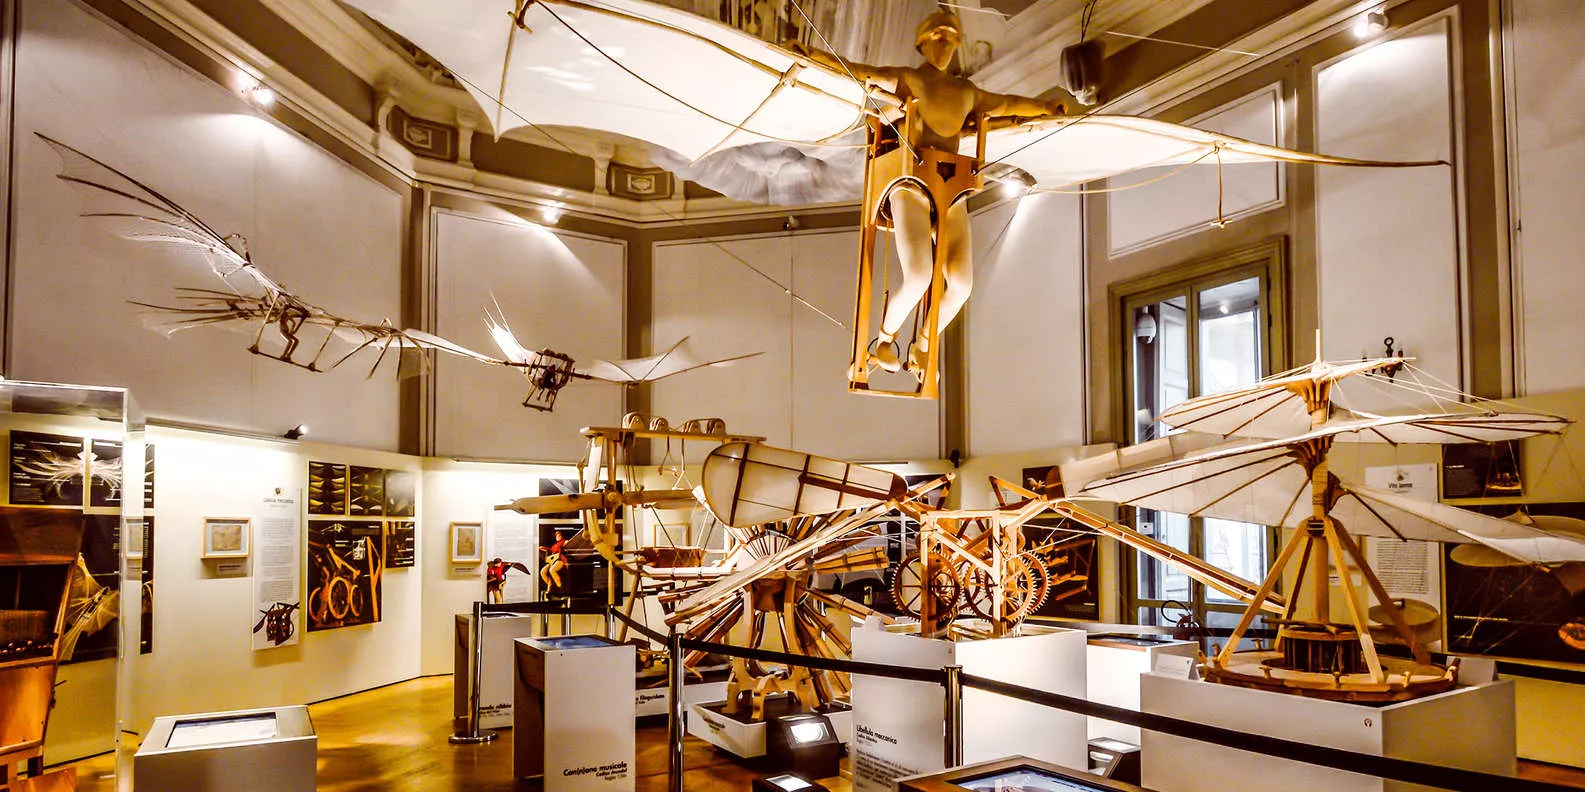 Leonardo da Vinci Interactive Museum in Italy, Europe | Museums - Rated 3.5